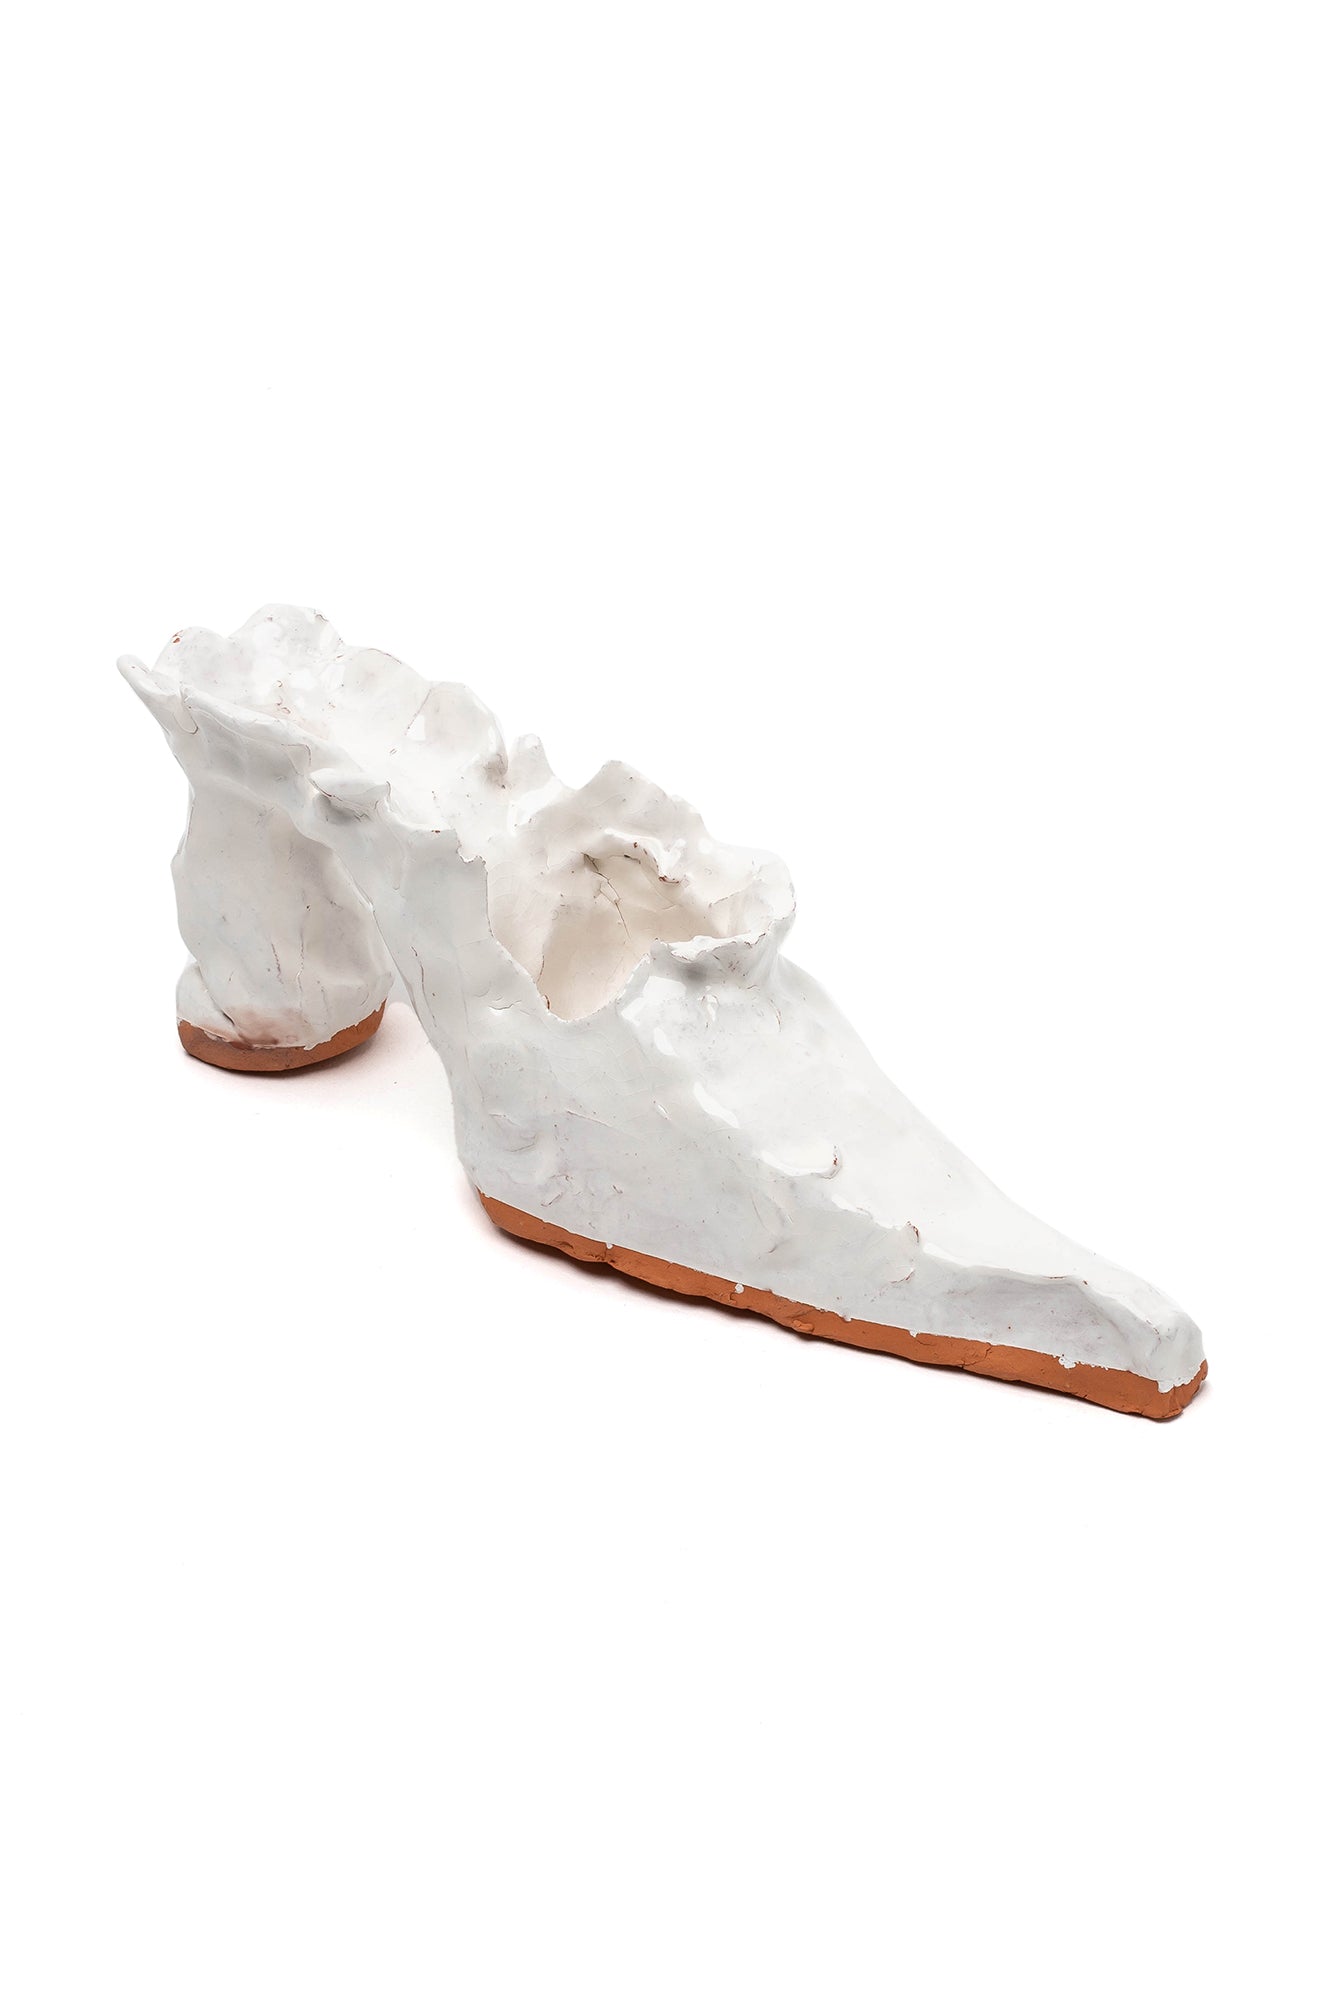 CARLA MILENTIS - Ceramic White Heel Sculpture - Error404store. White ceramic sculpture of a heel. Handmade by Melbourne based artist Carla Lementis, sold in Melbourne boutique called Error404store.